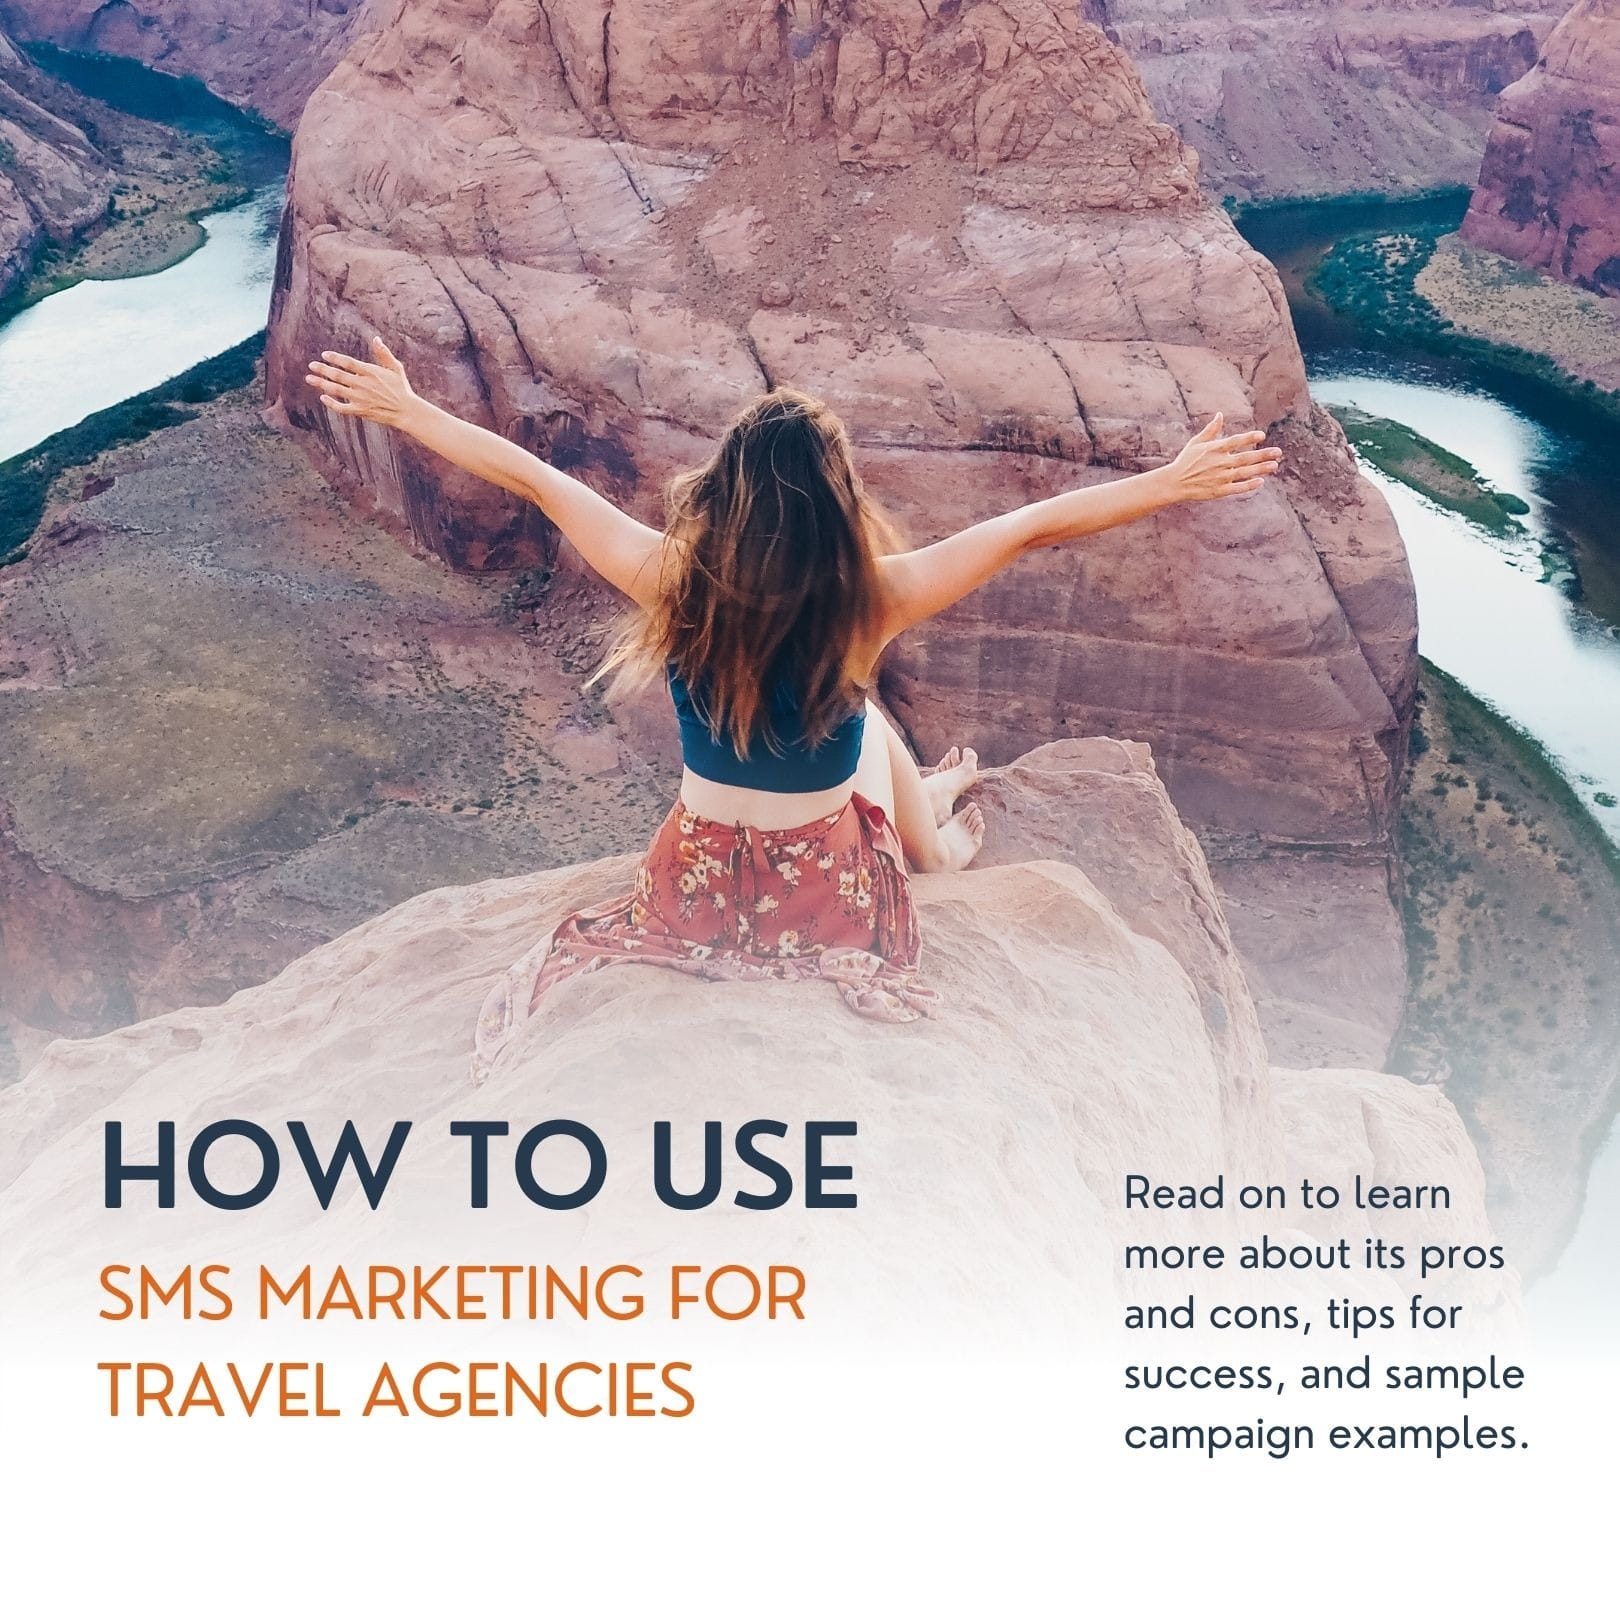 SMS Marketing For Travel Agencies (1).jpg